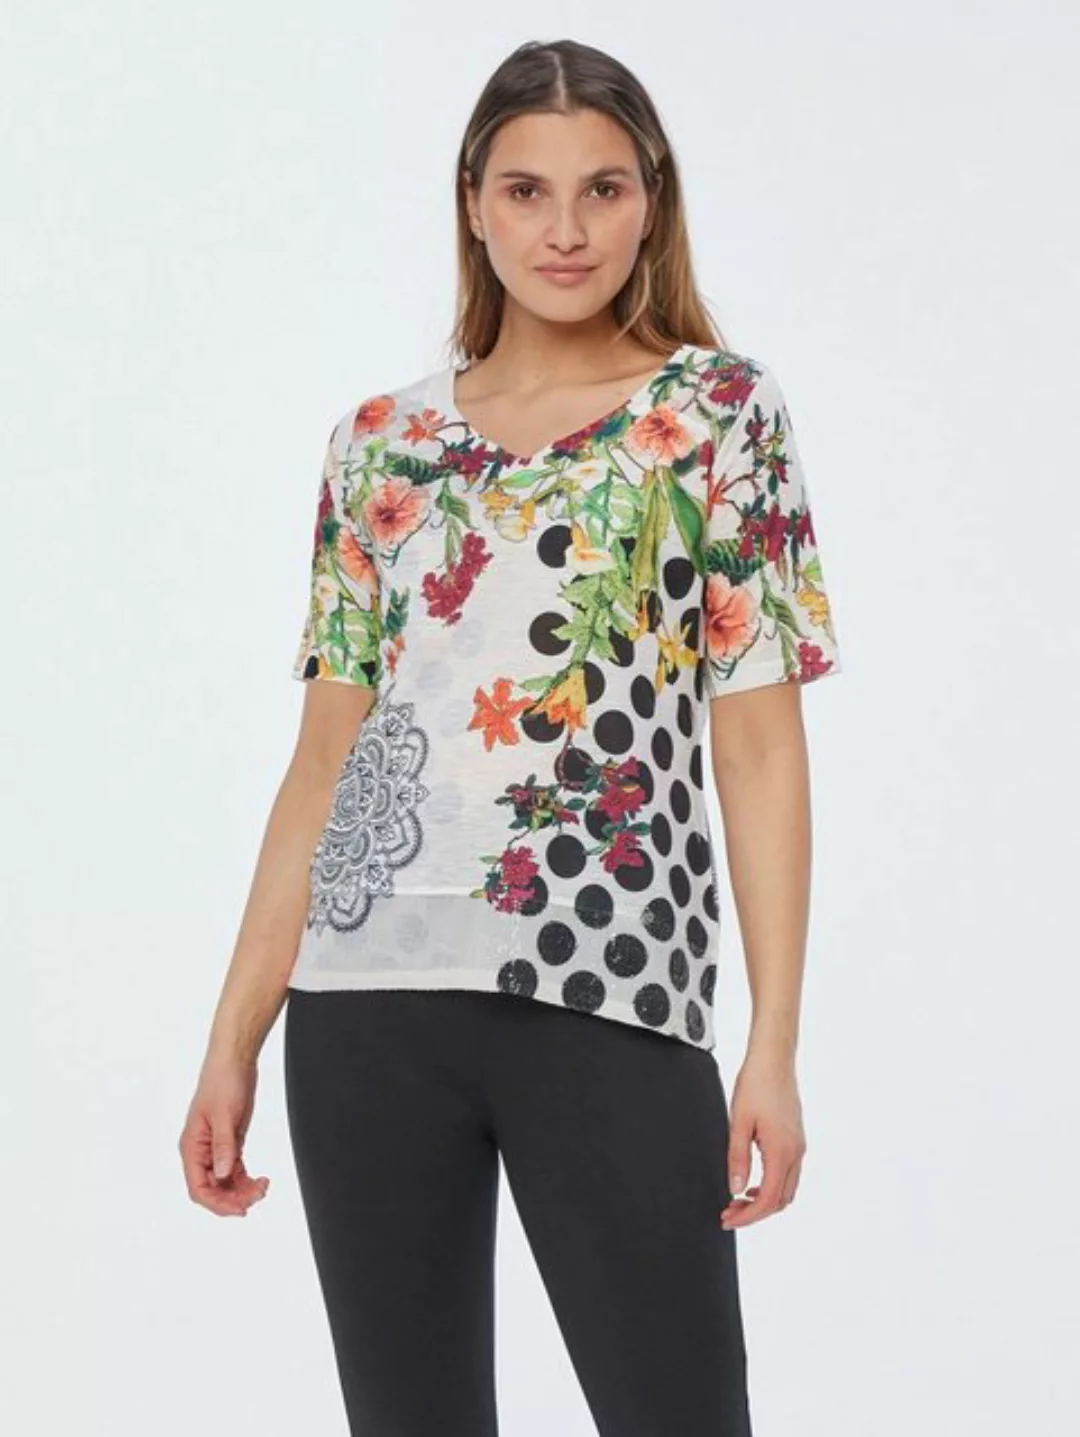 Christian Materne T-Shirt Druckbluse koerpernah mit floralem Print günstig online kaufen